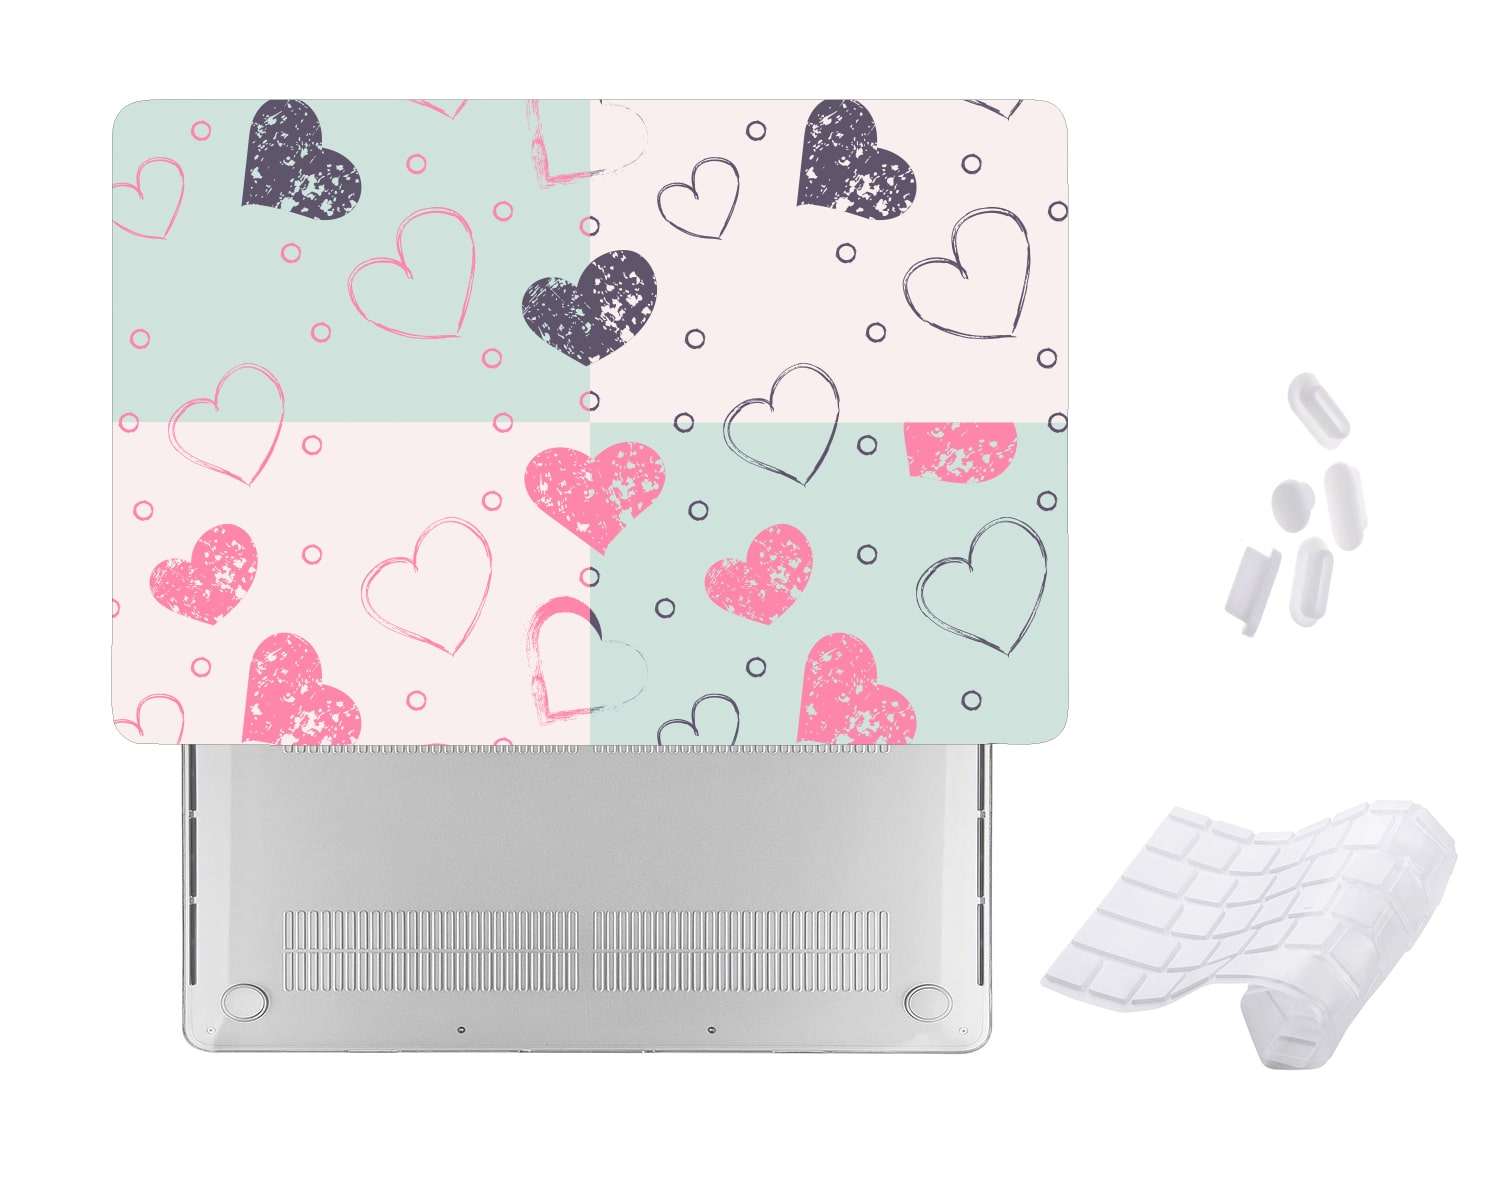 Case Cover for Macbook - Grunge Hearts Pattern Design